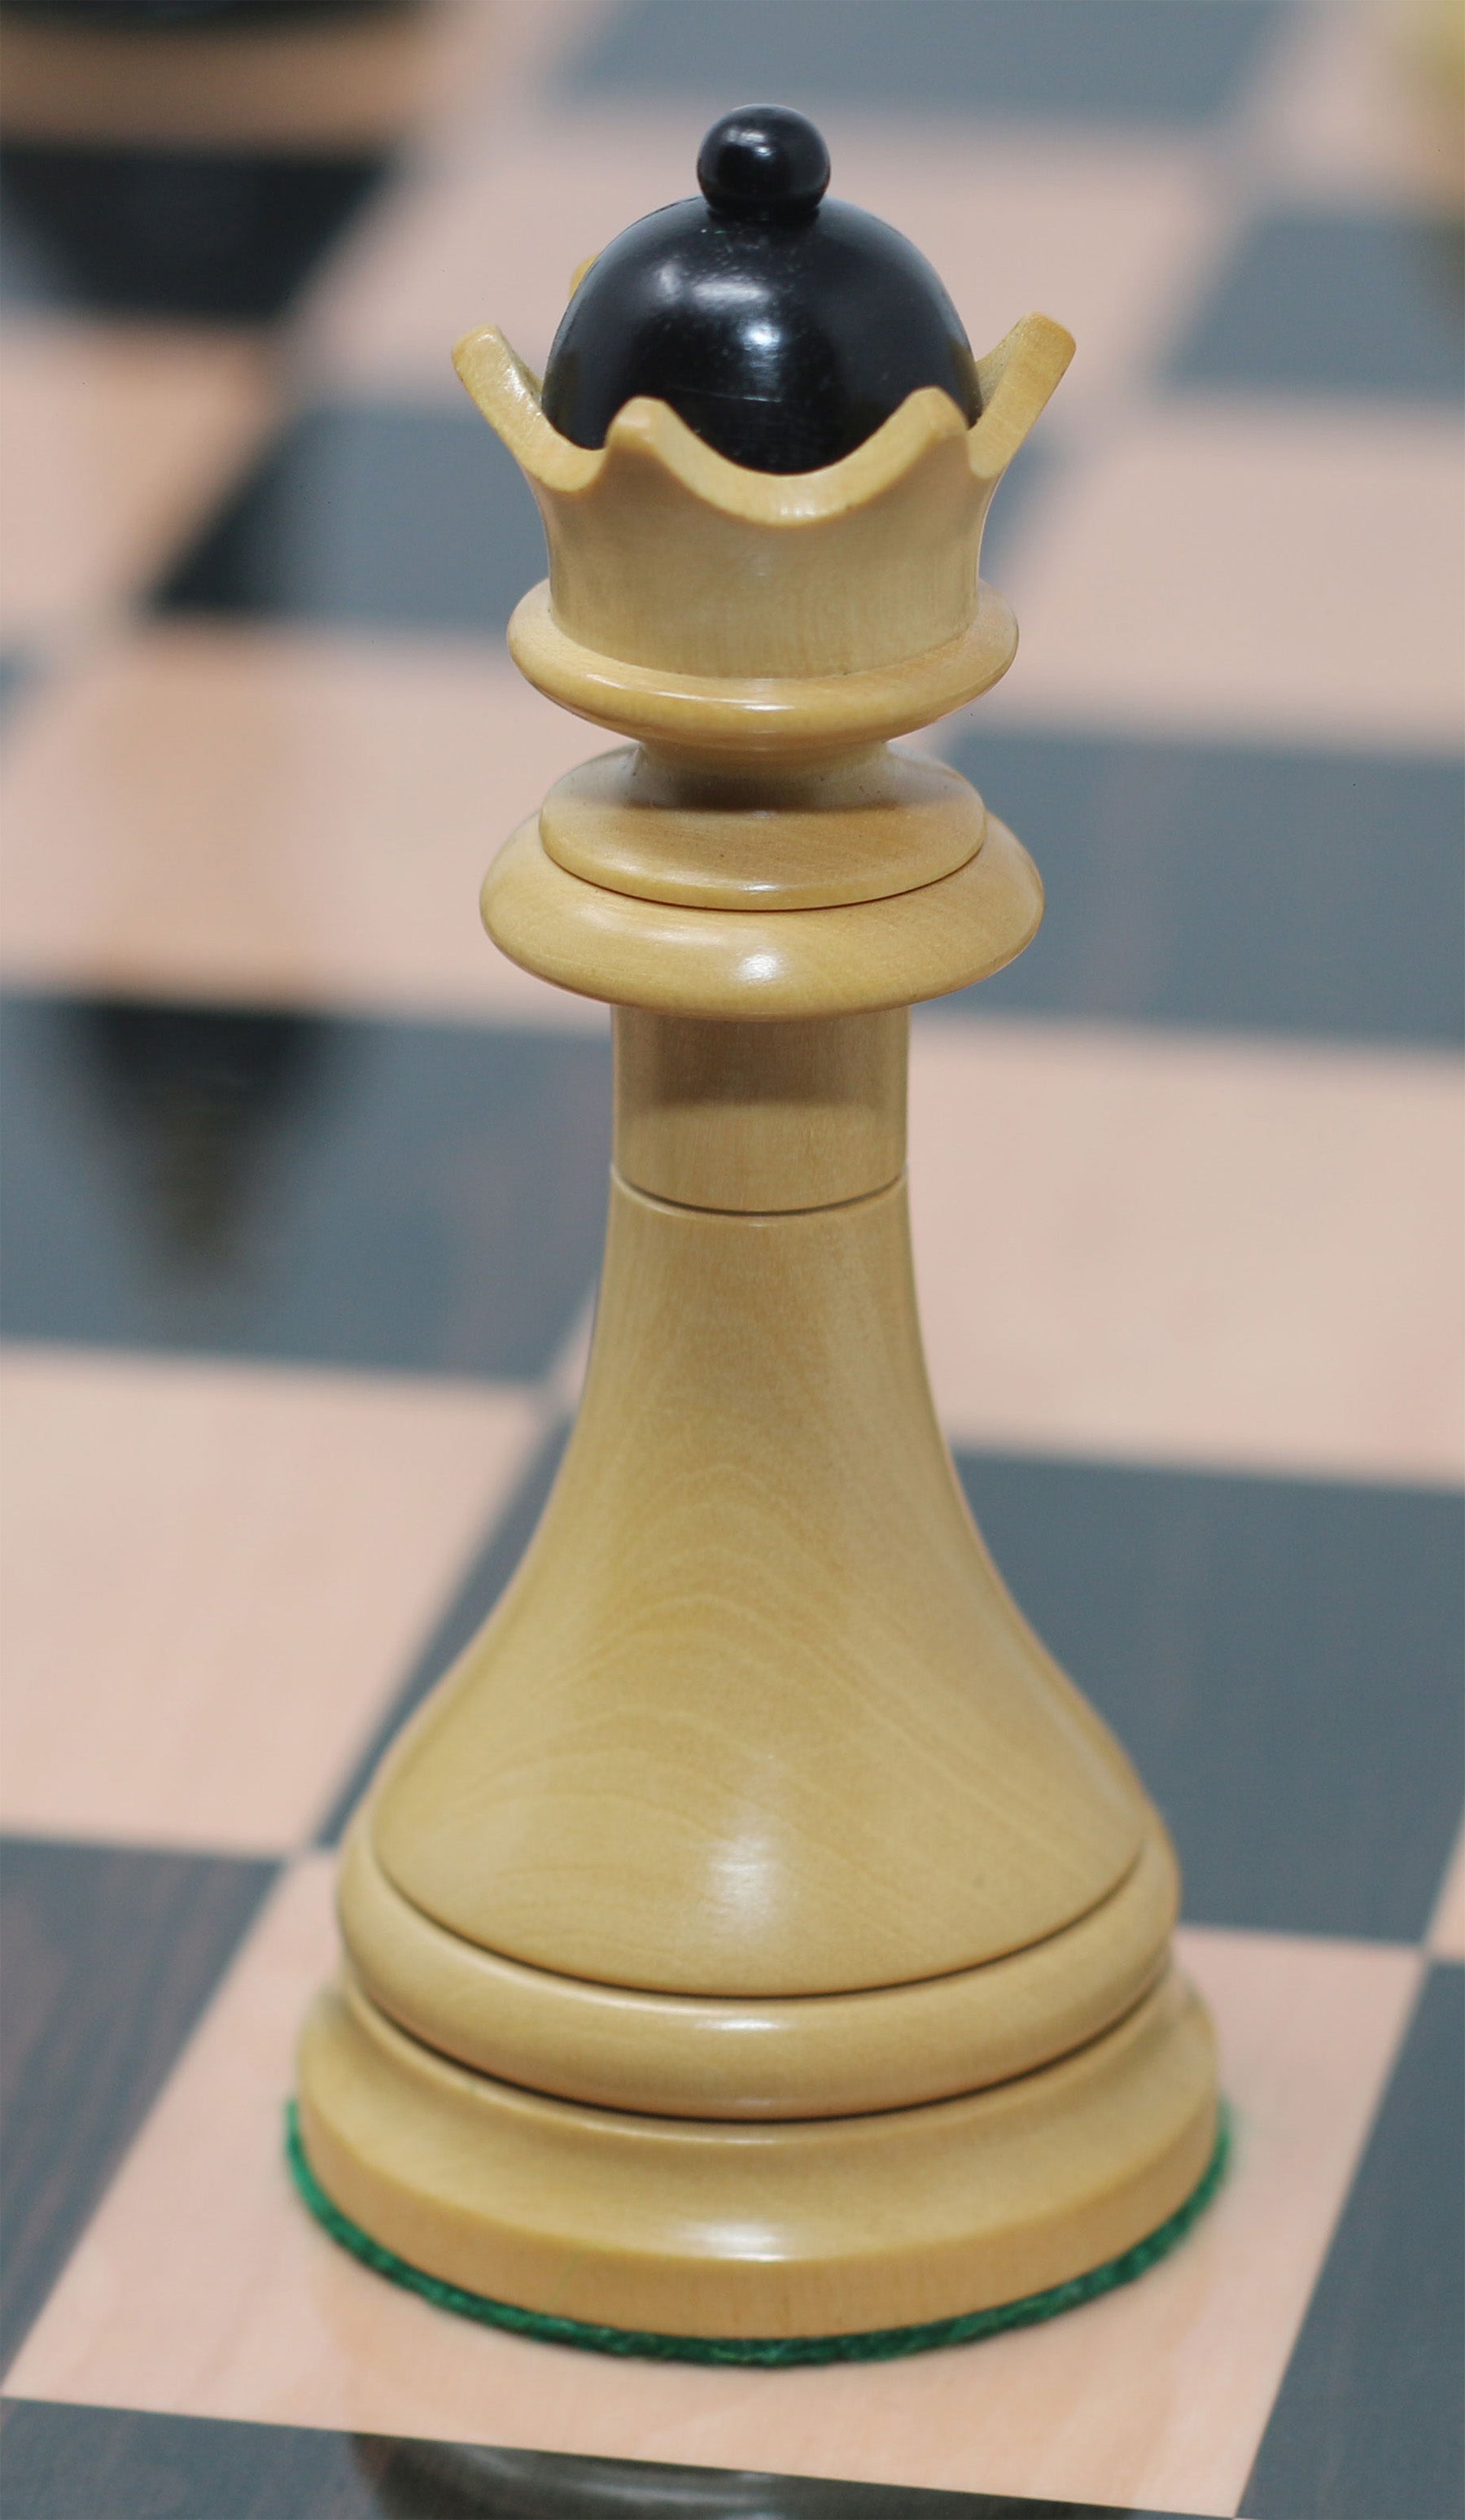 THE 1951-1954 "ČESKÁ KLUBOVKA" FIDE TOURNAMENT CZECH REPRODUCTION CHESSMEN IN EBONY WOOD & BOXWOOD - 4.0" KING